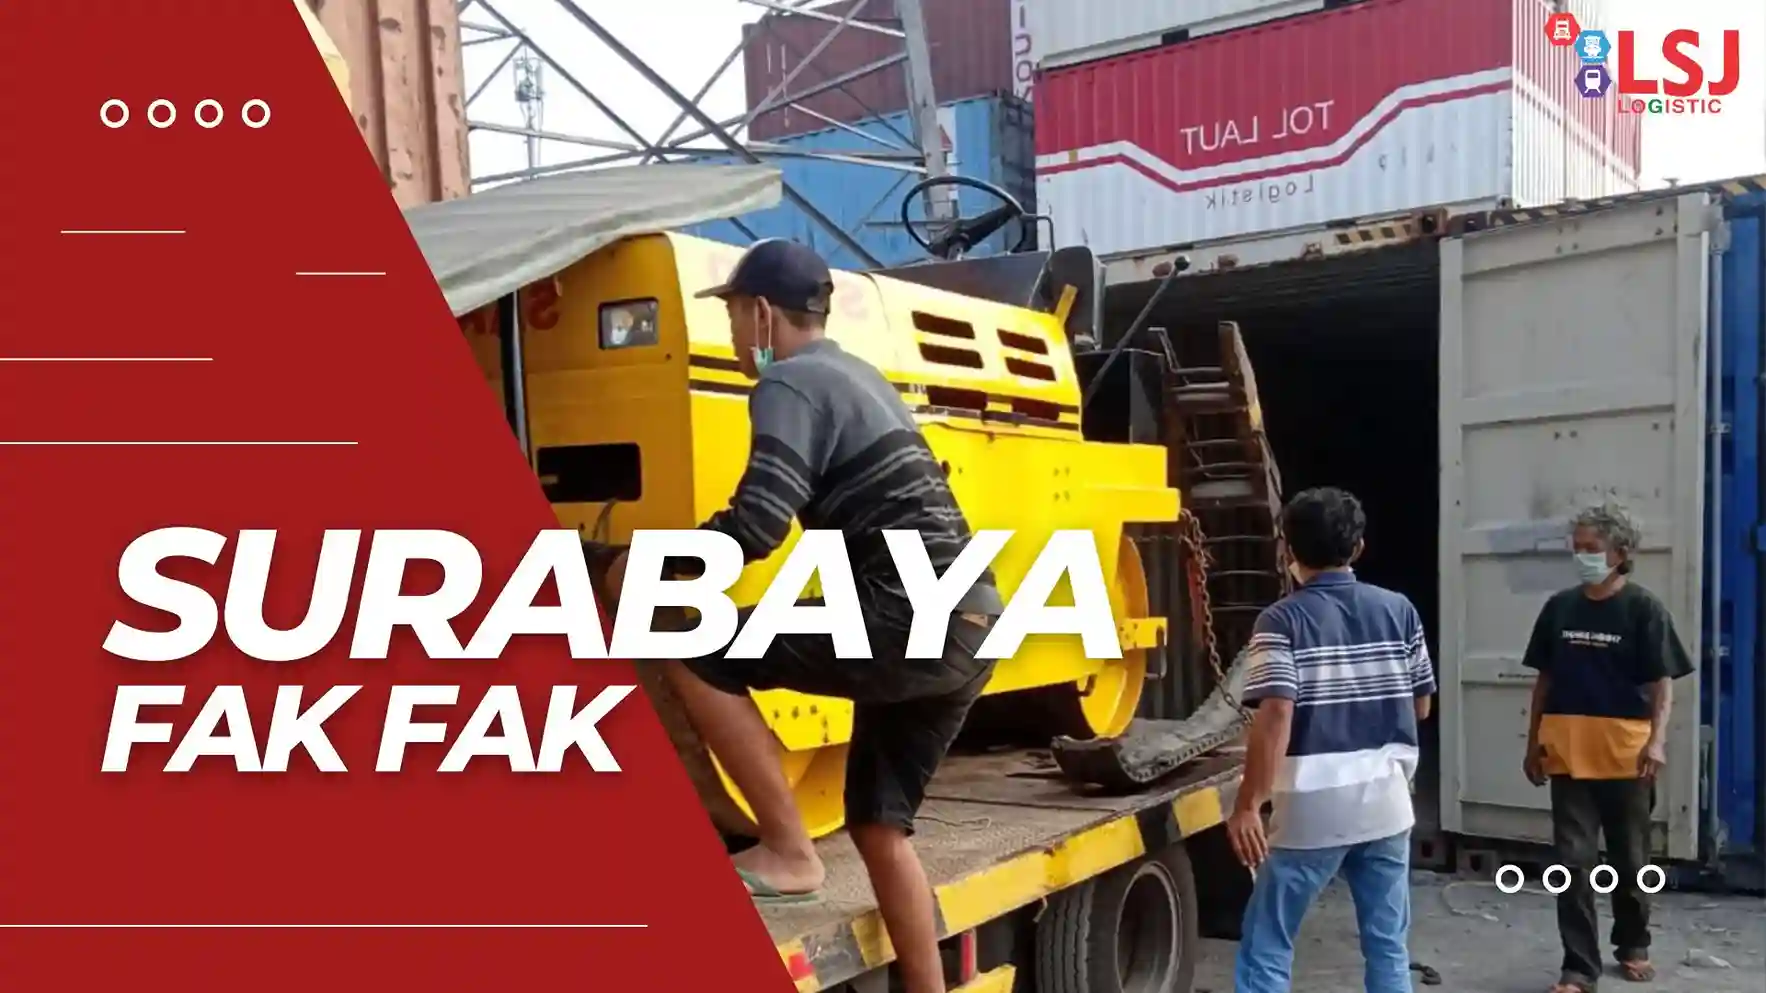 Harga Pengiriman Container Surabaya Fak Fak